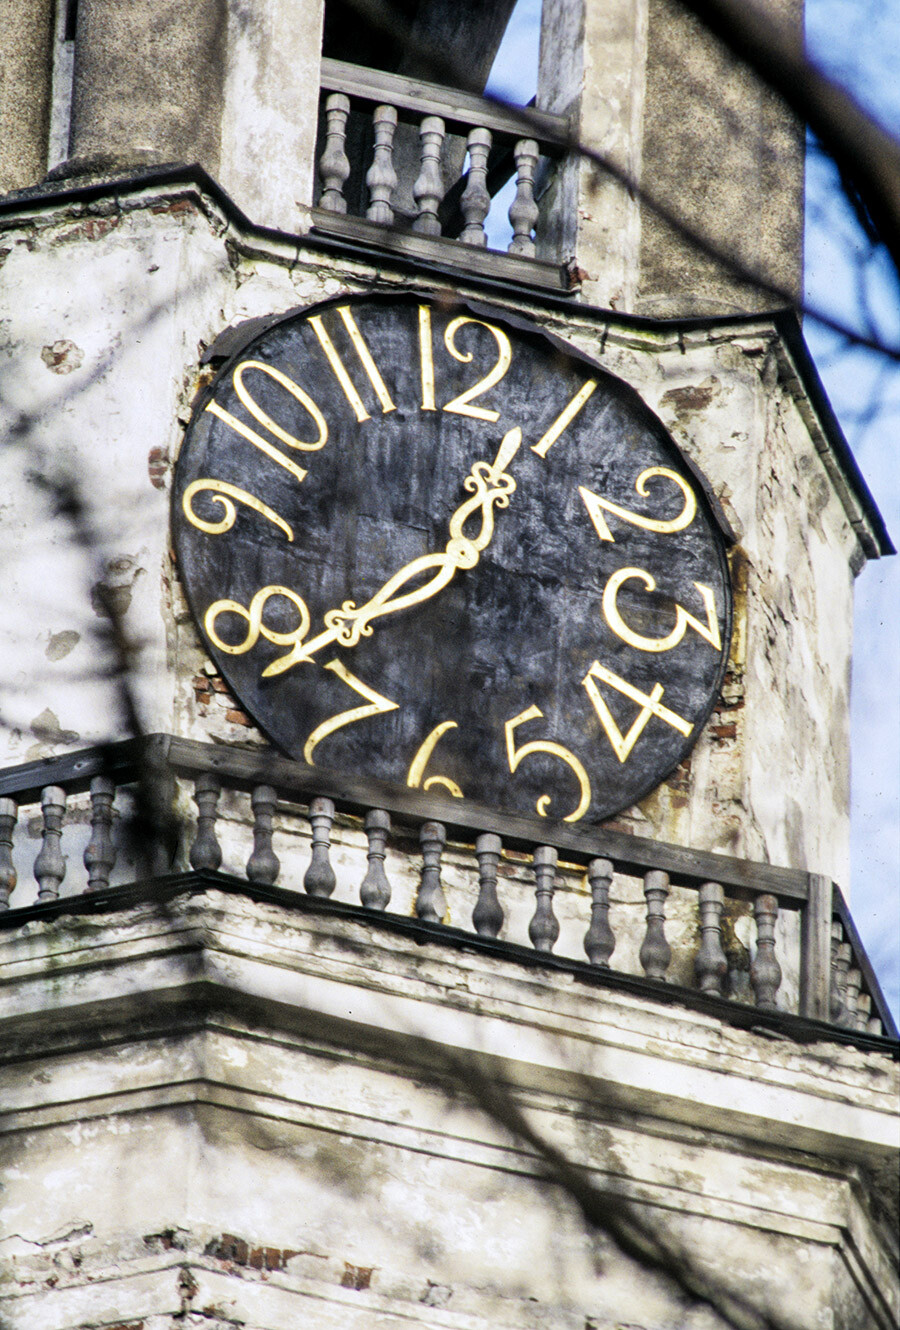 Ura na urnem stolpu, nekdanjem zvoniku katedrale, zgrajenem leta 1494